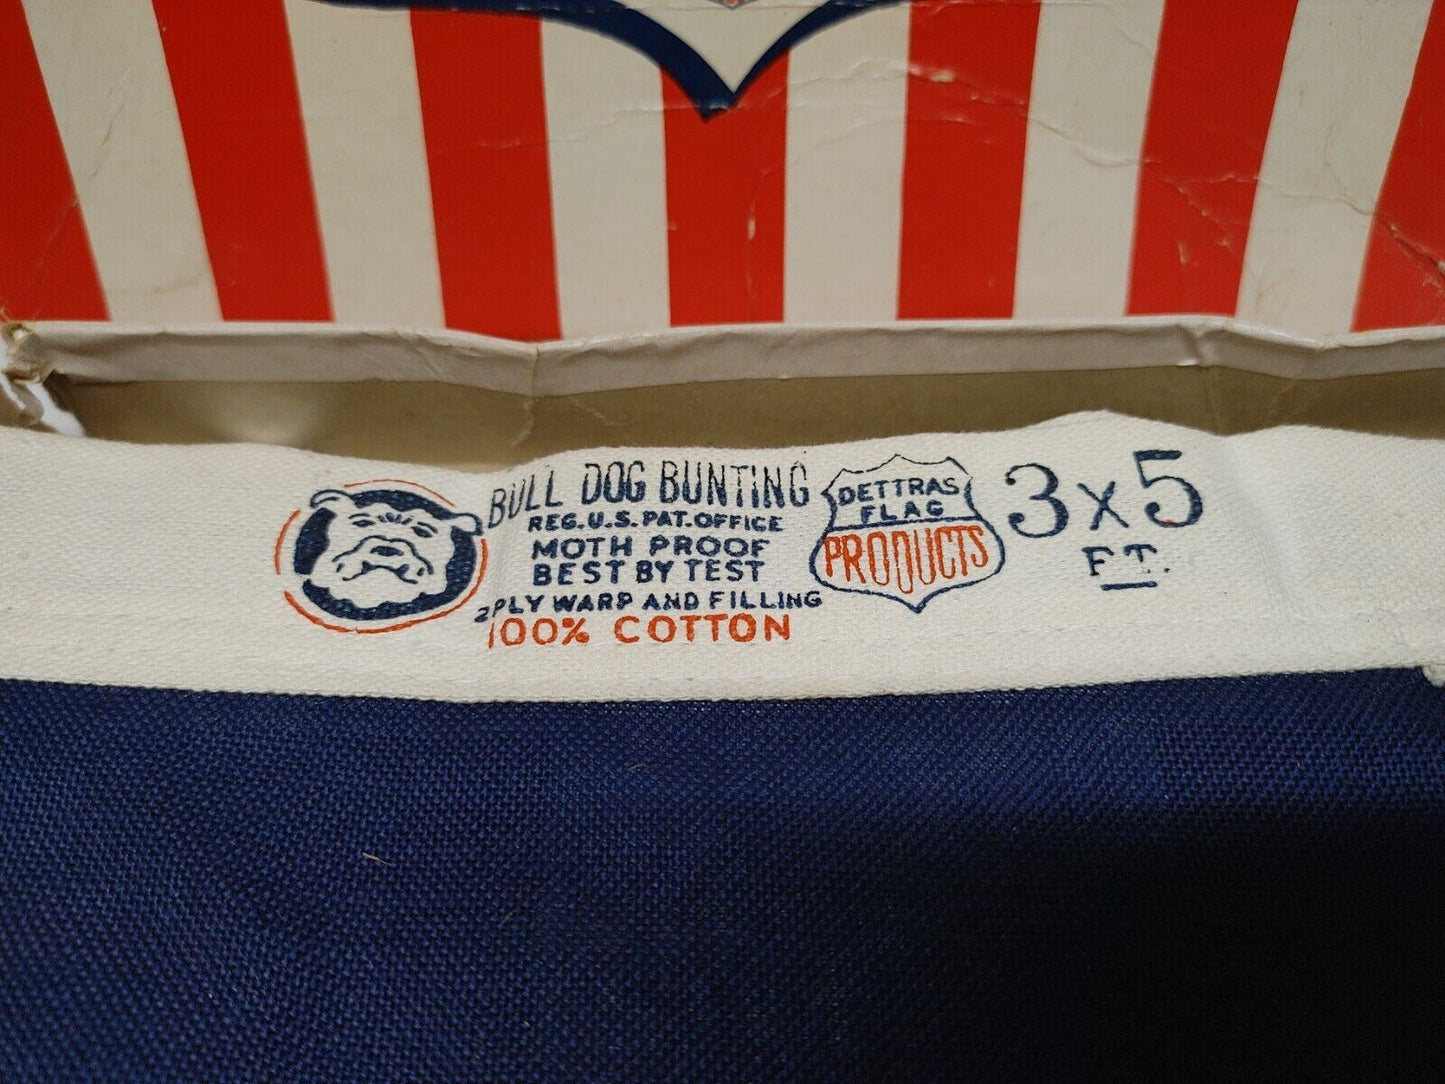 Vintage U.S. Flag Bull Dog Bunting 100% Cotton 50 Star Embroidered USA Unflown